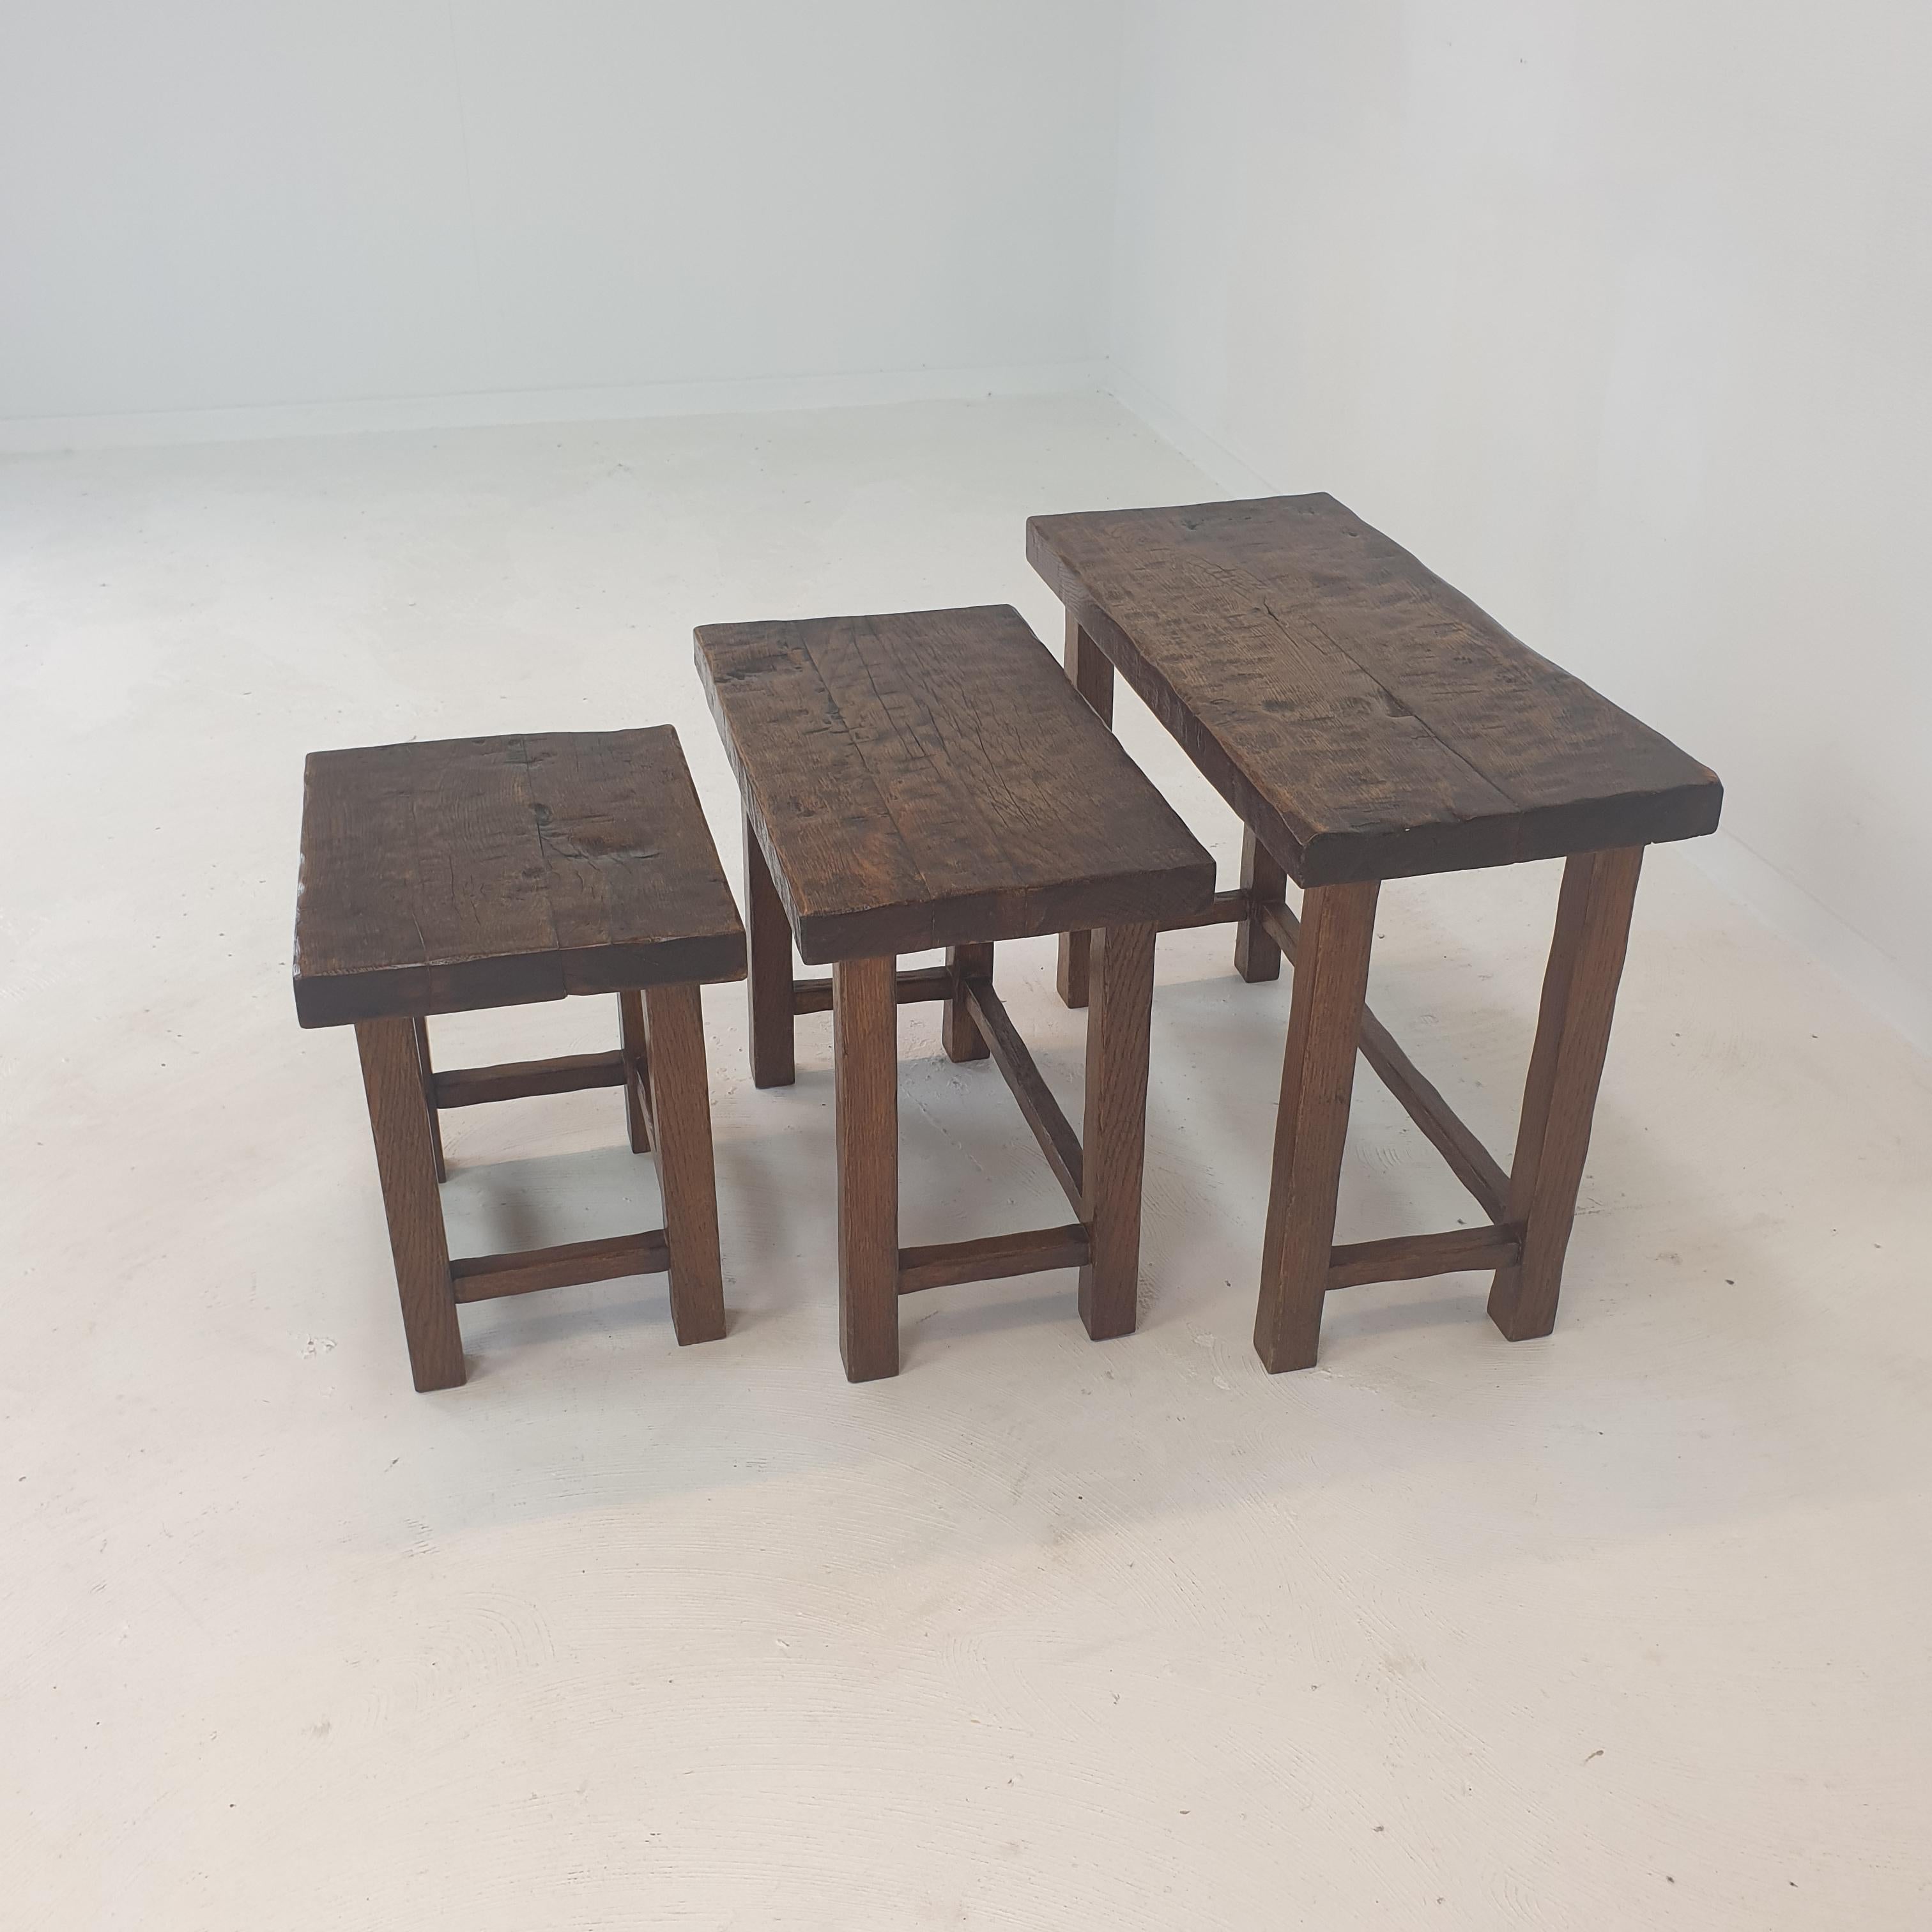 Dutch Set of 3 Brutalist Wooden Nesting Tables, Holland 1960s For Sale